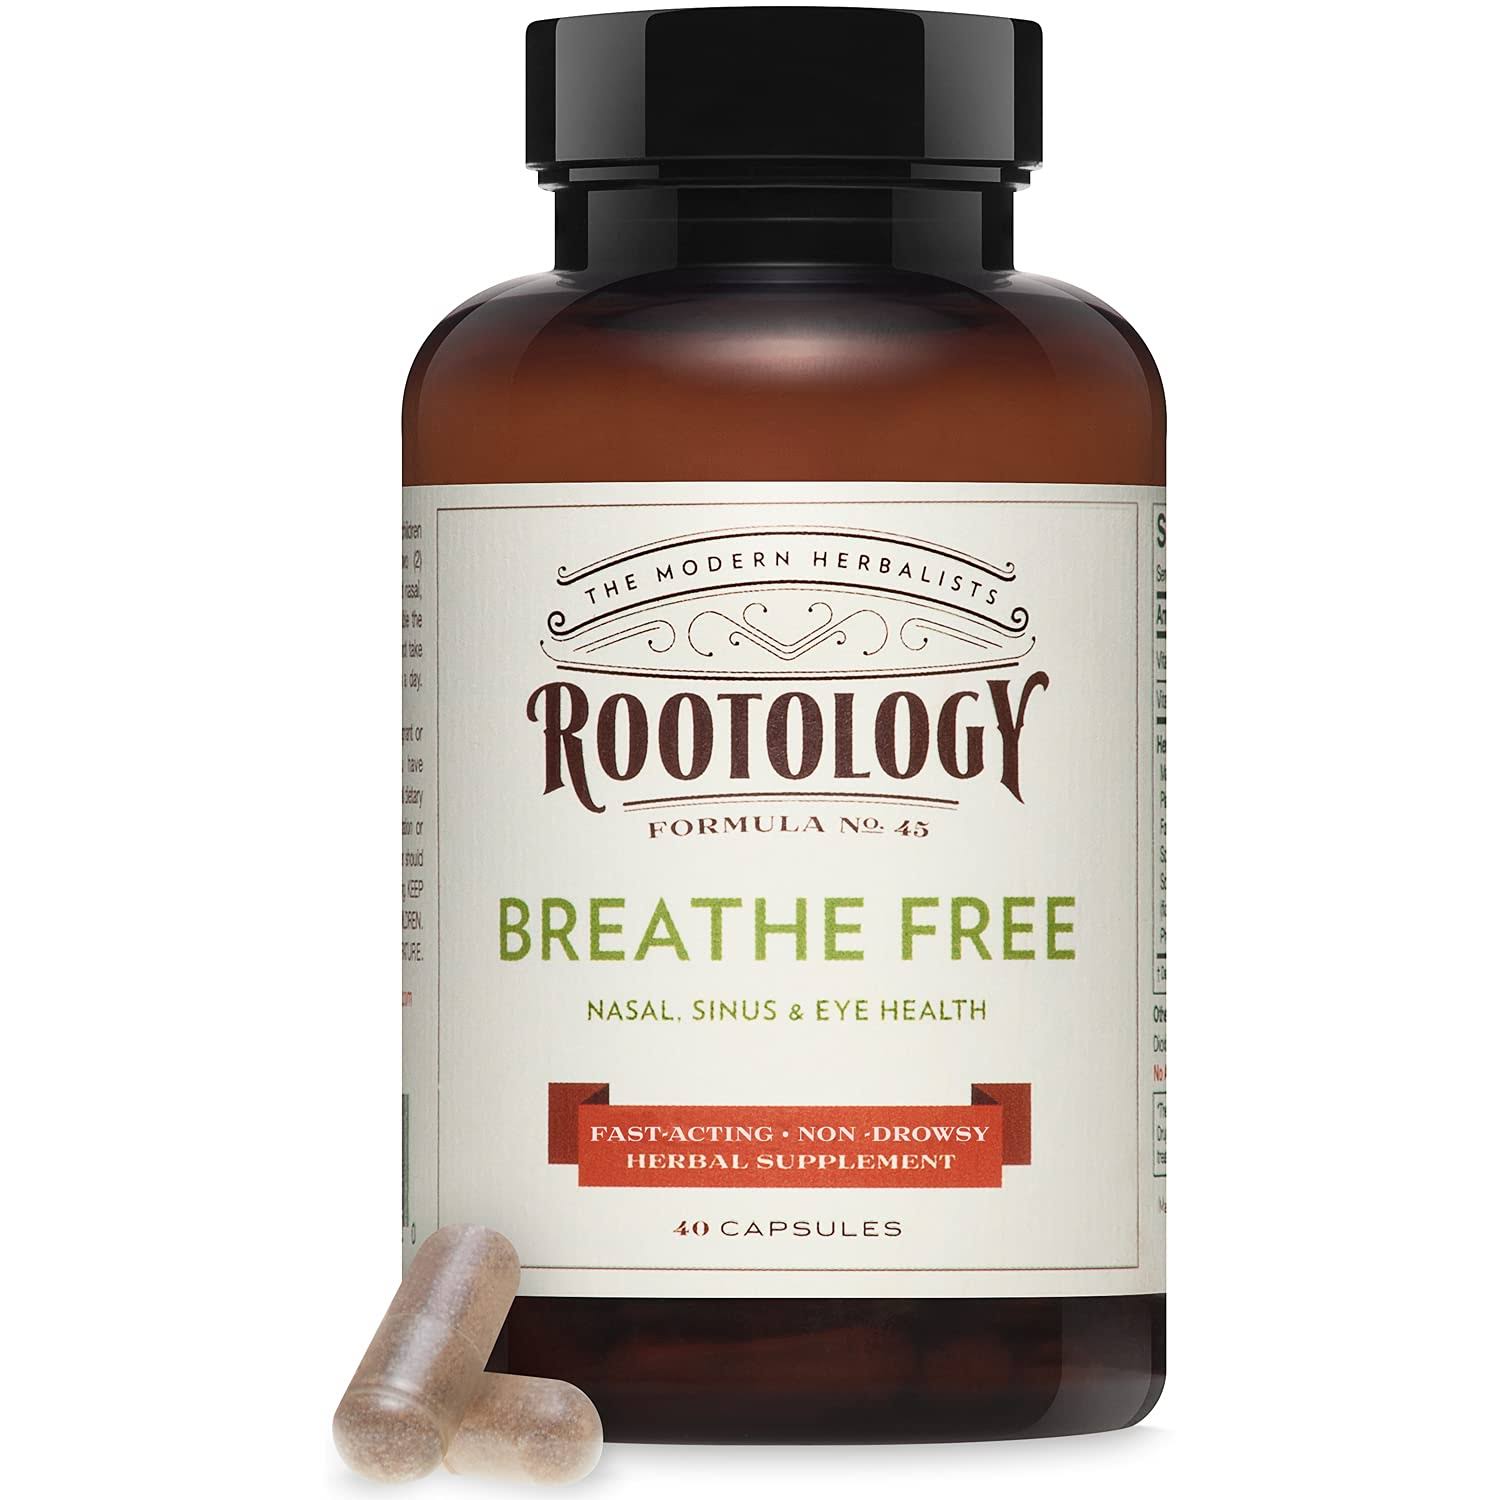 Rootology Breathe Free, Capsules - 40 capsules